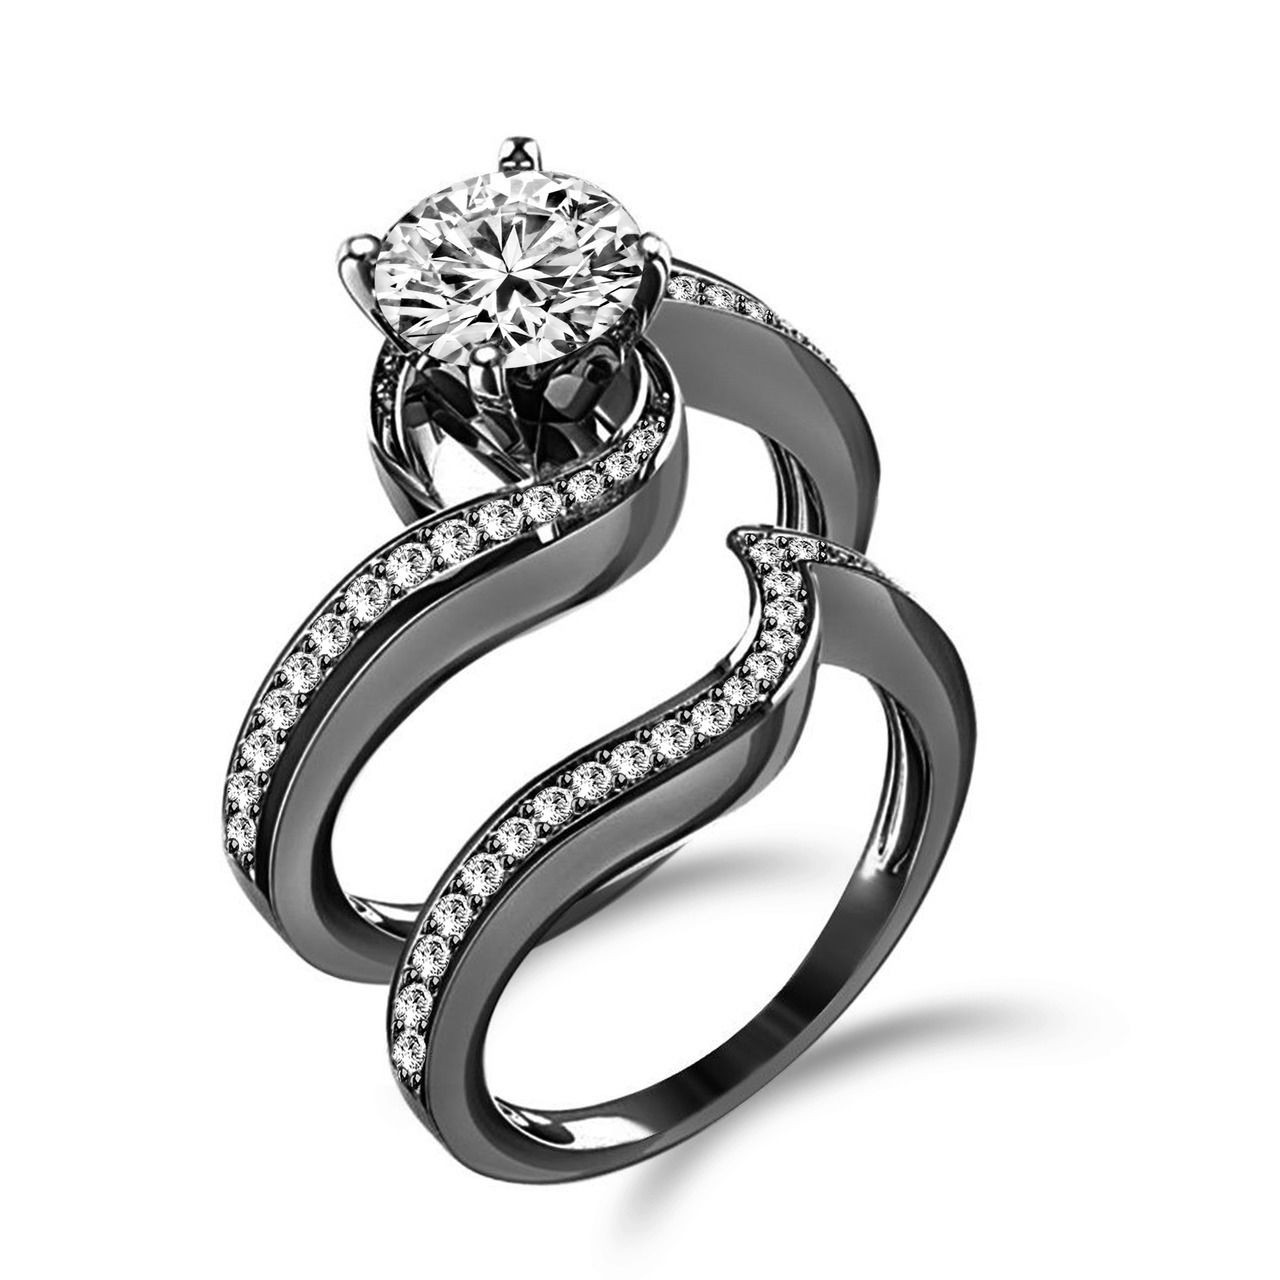 Wedding Rings Black
 Engagement Ring with Wedding Band Black Rhodium Plated